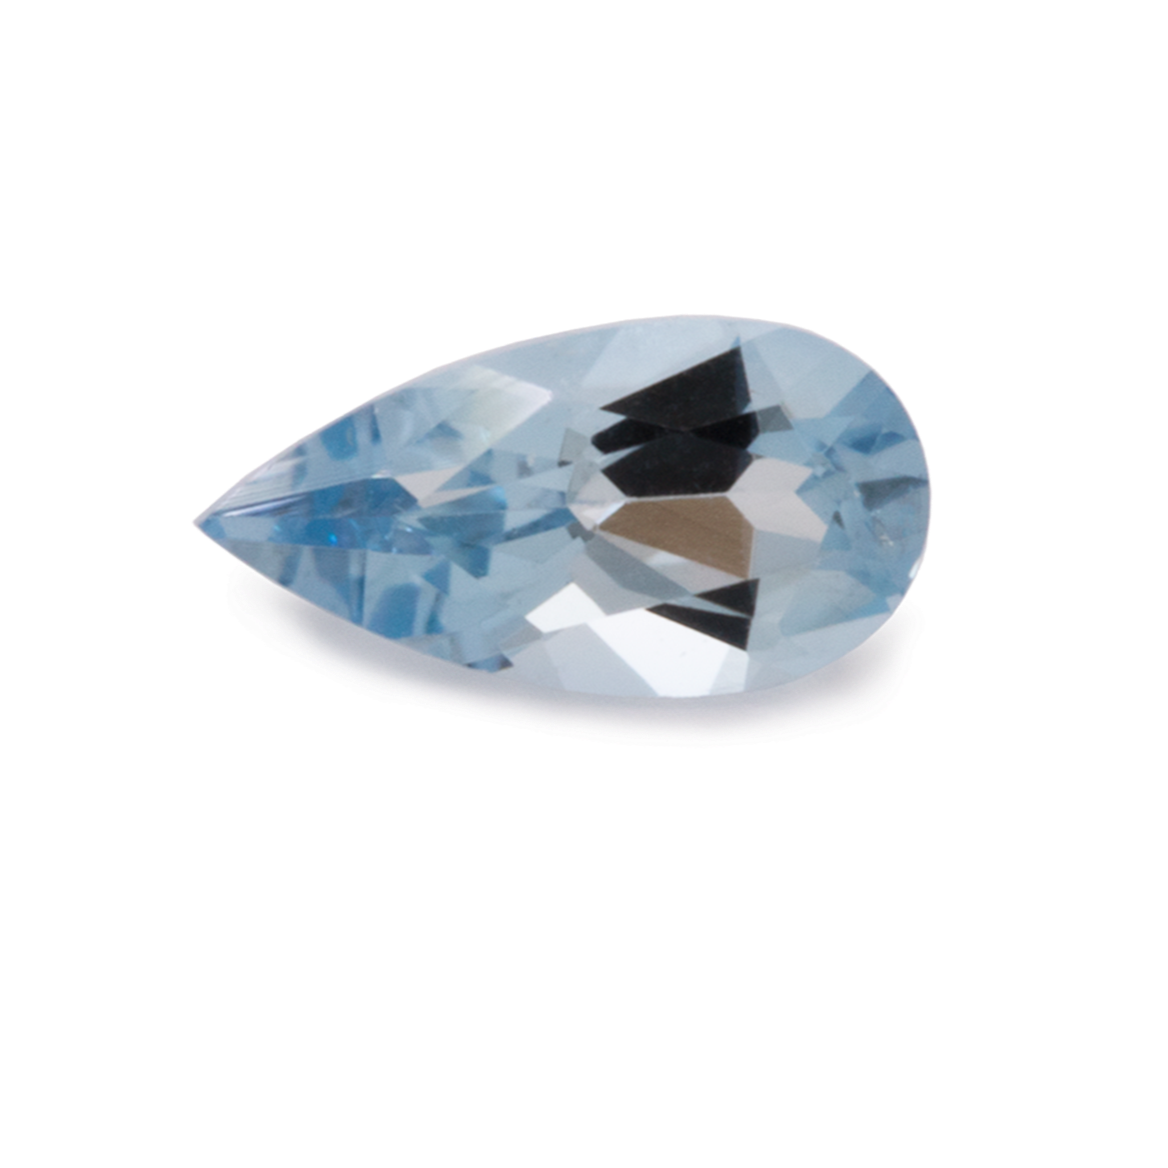 Aquamarine - A, pearshape, 4x2 mm, 0.05-0.07 cts, No. A05001